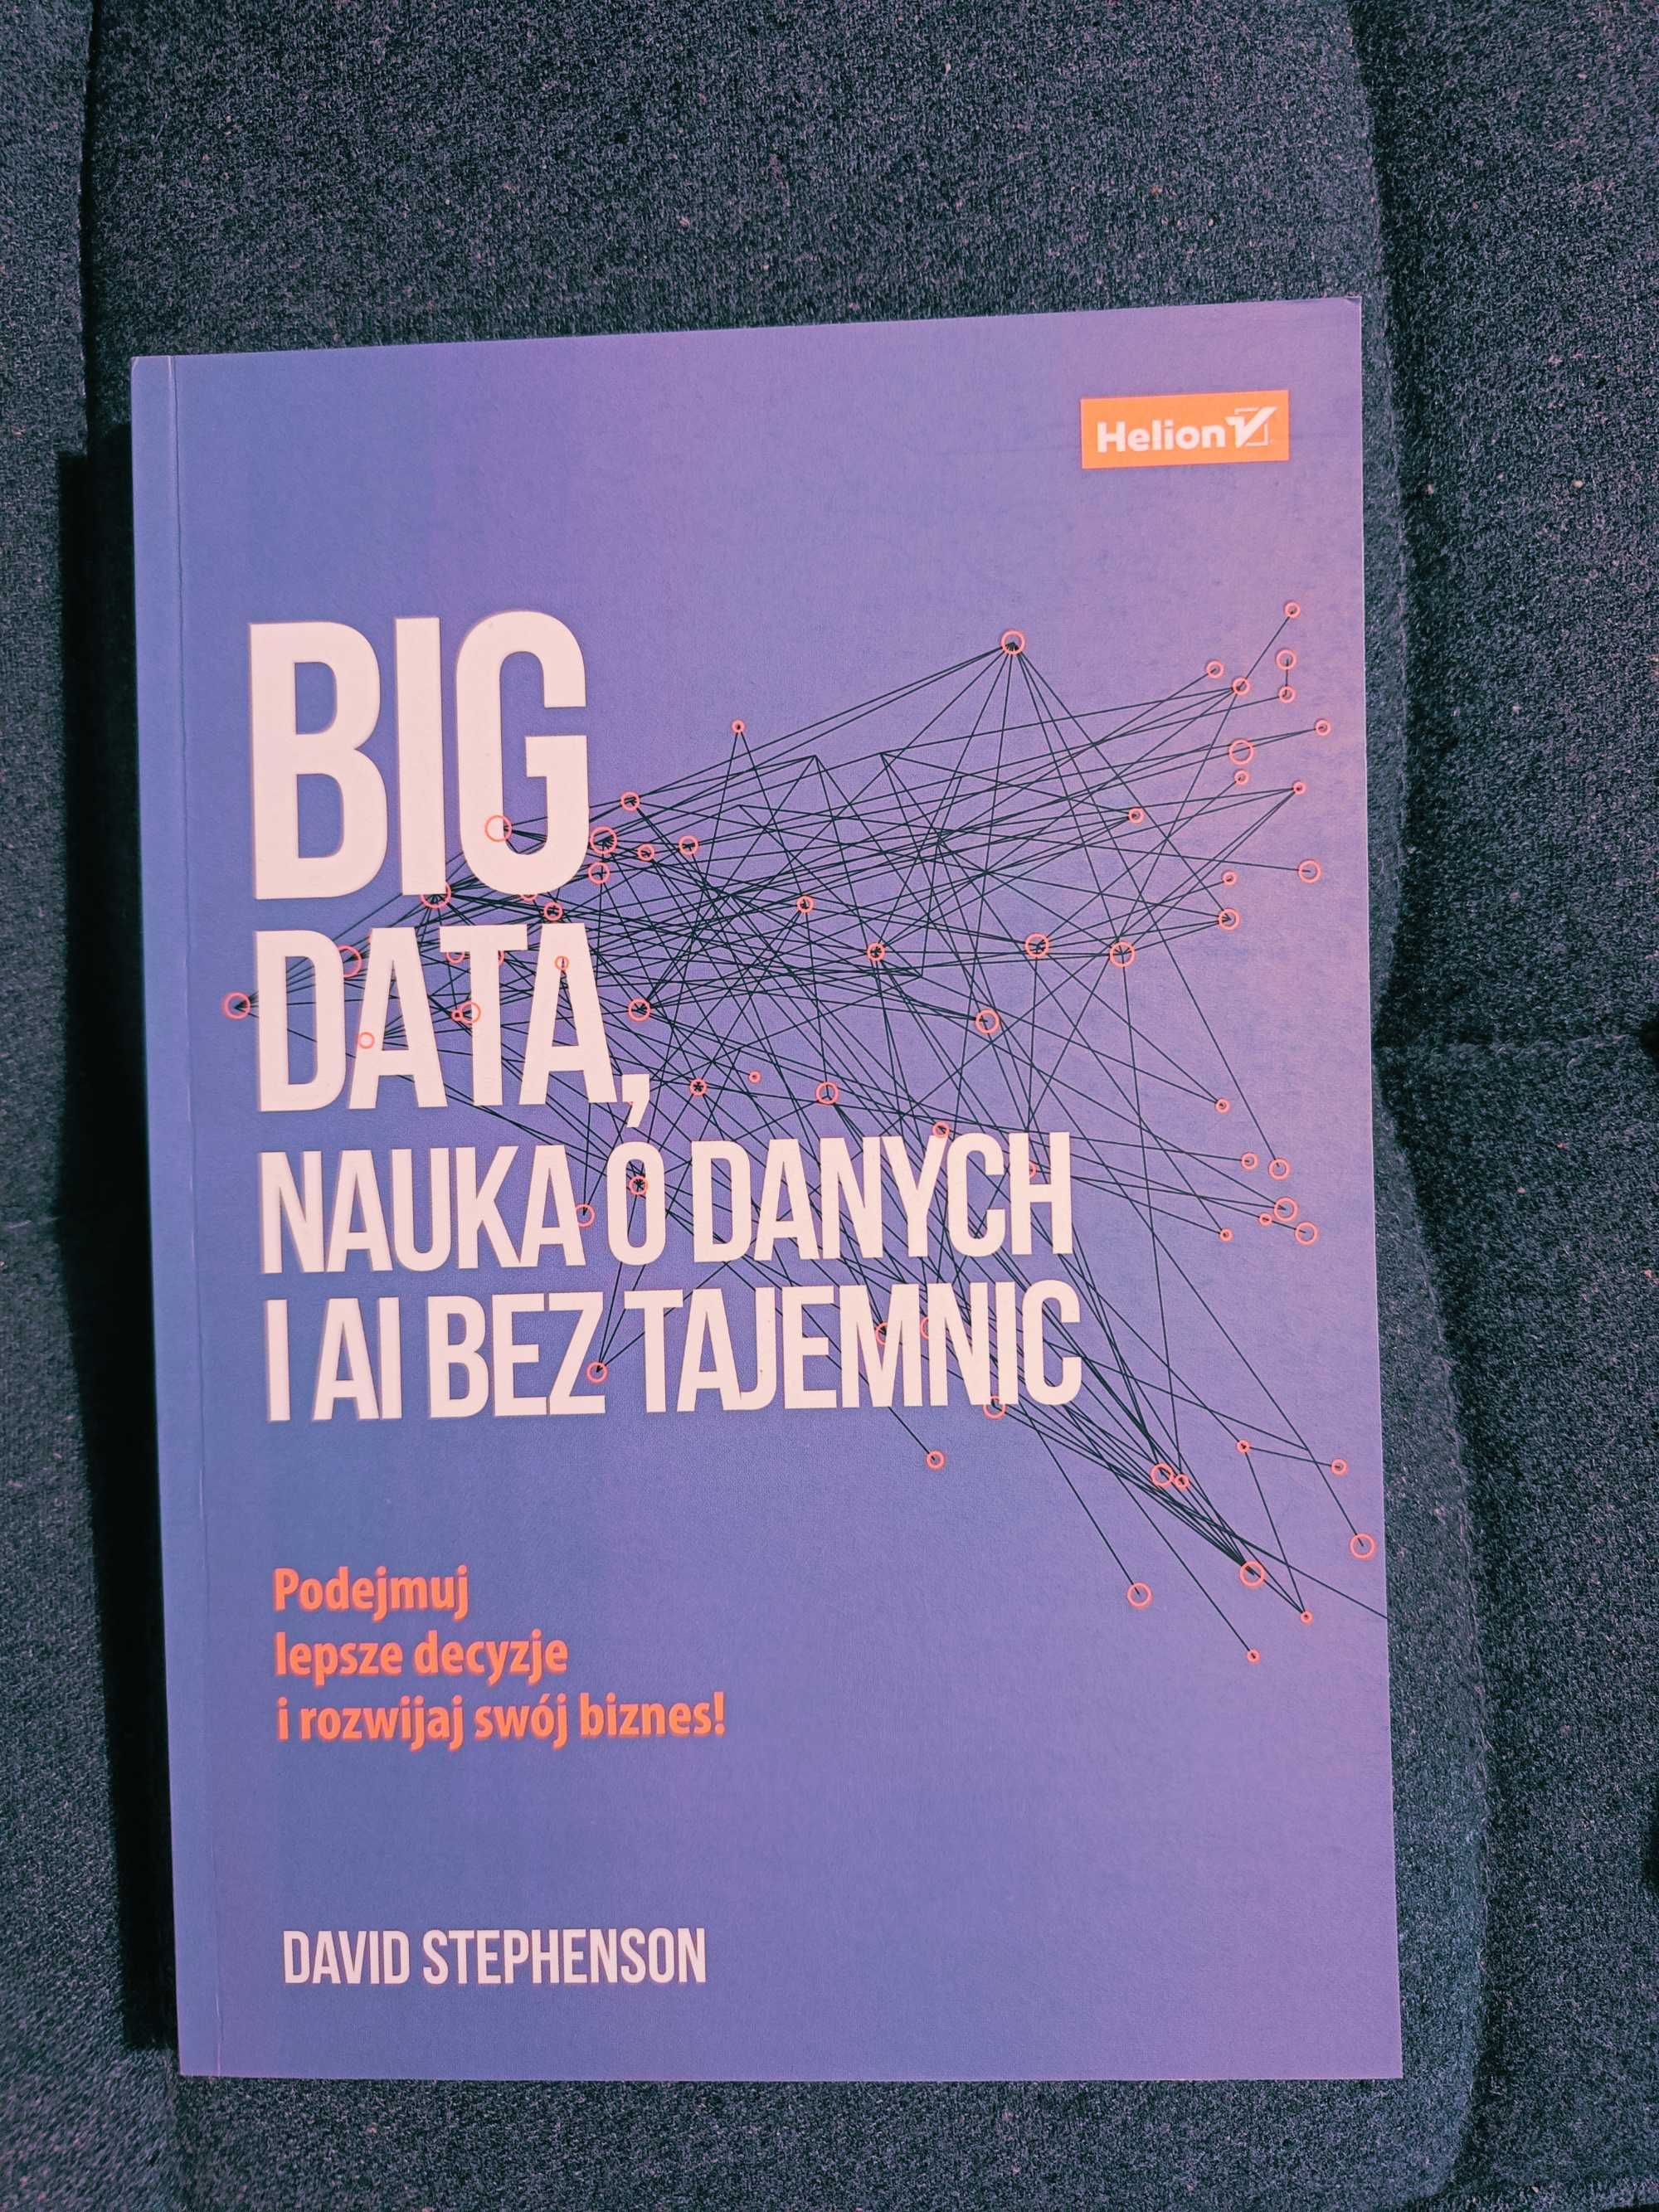 Big data, nauka o danych i AI bez tajemnic [Big Data, IT]